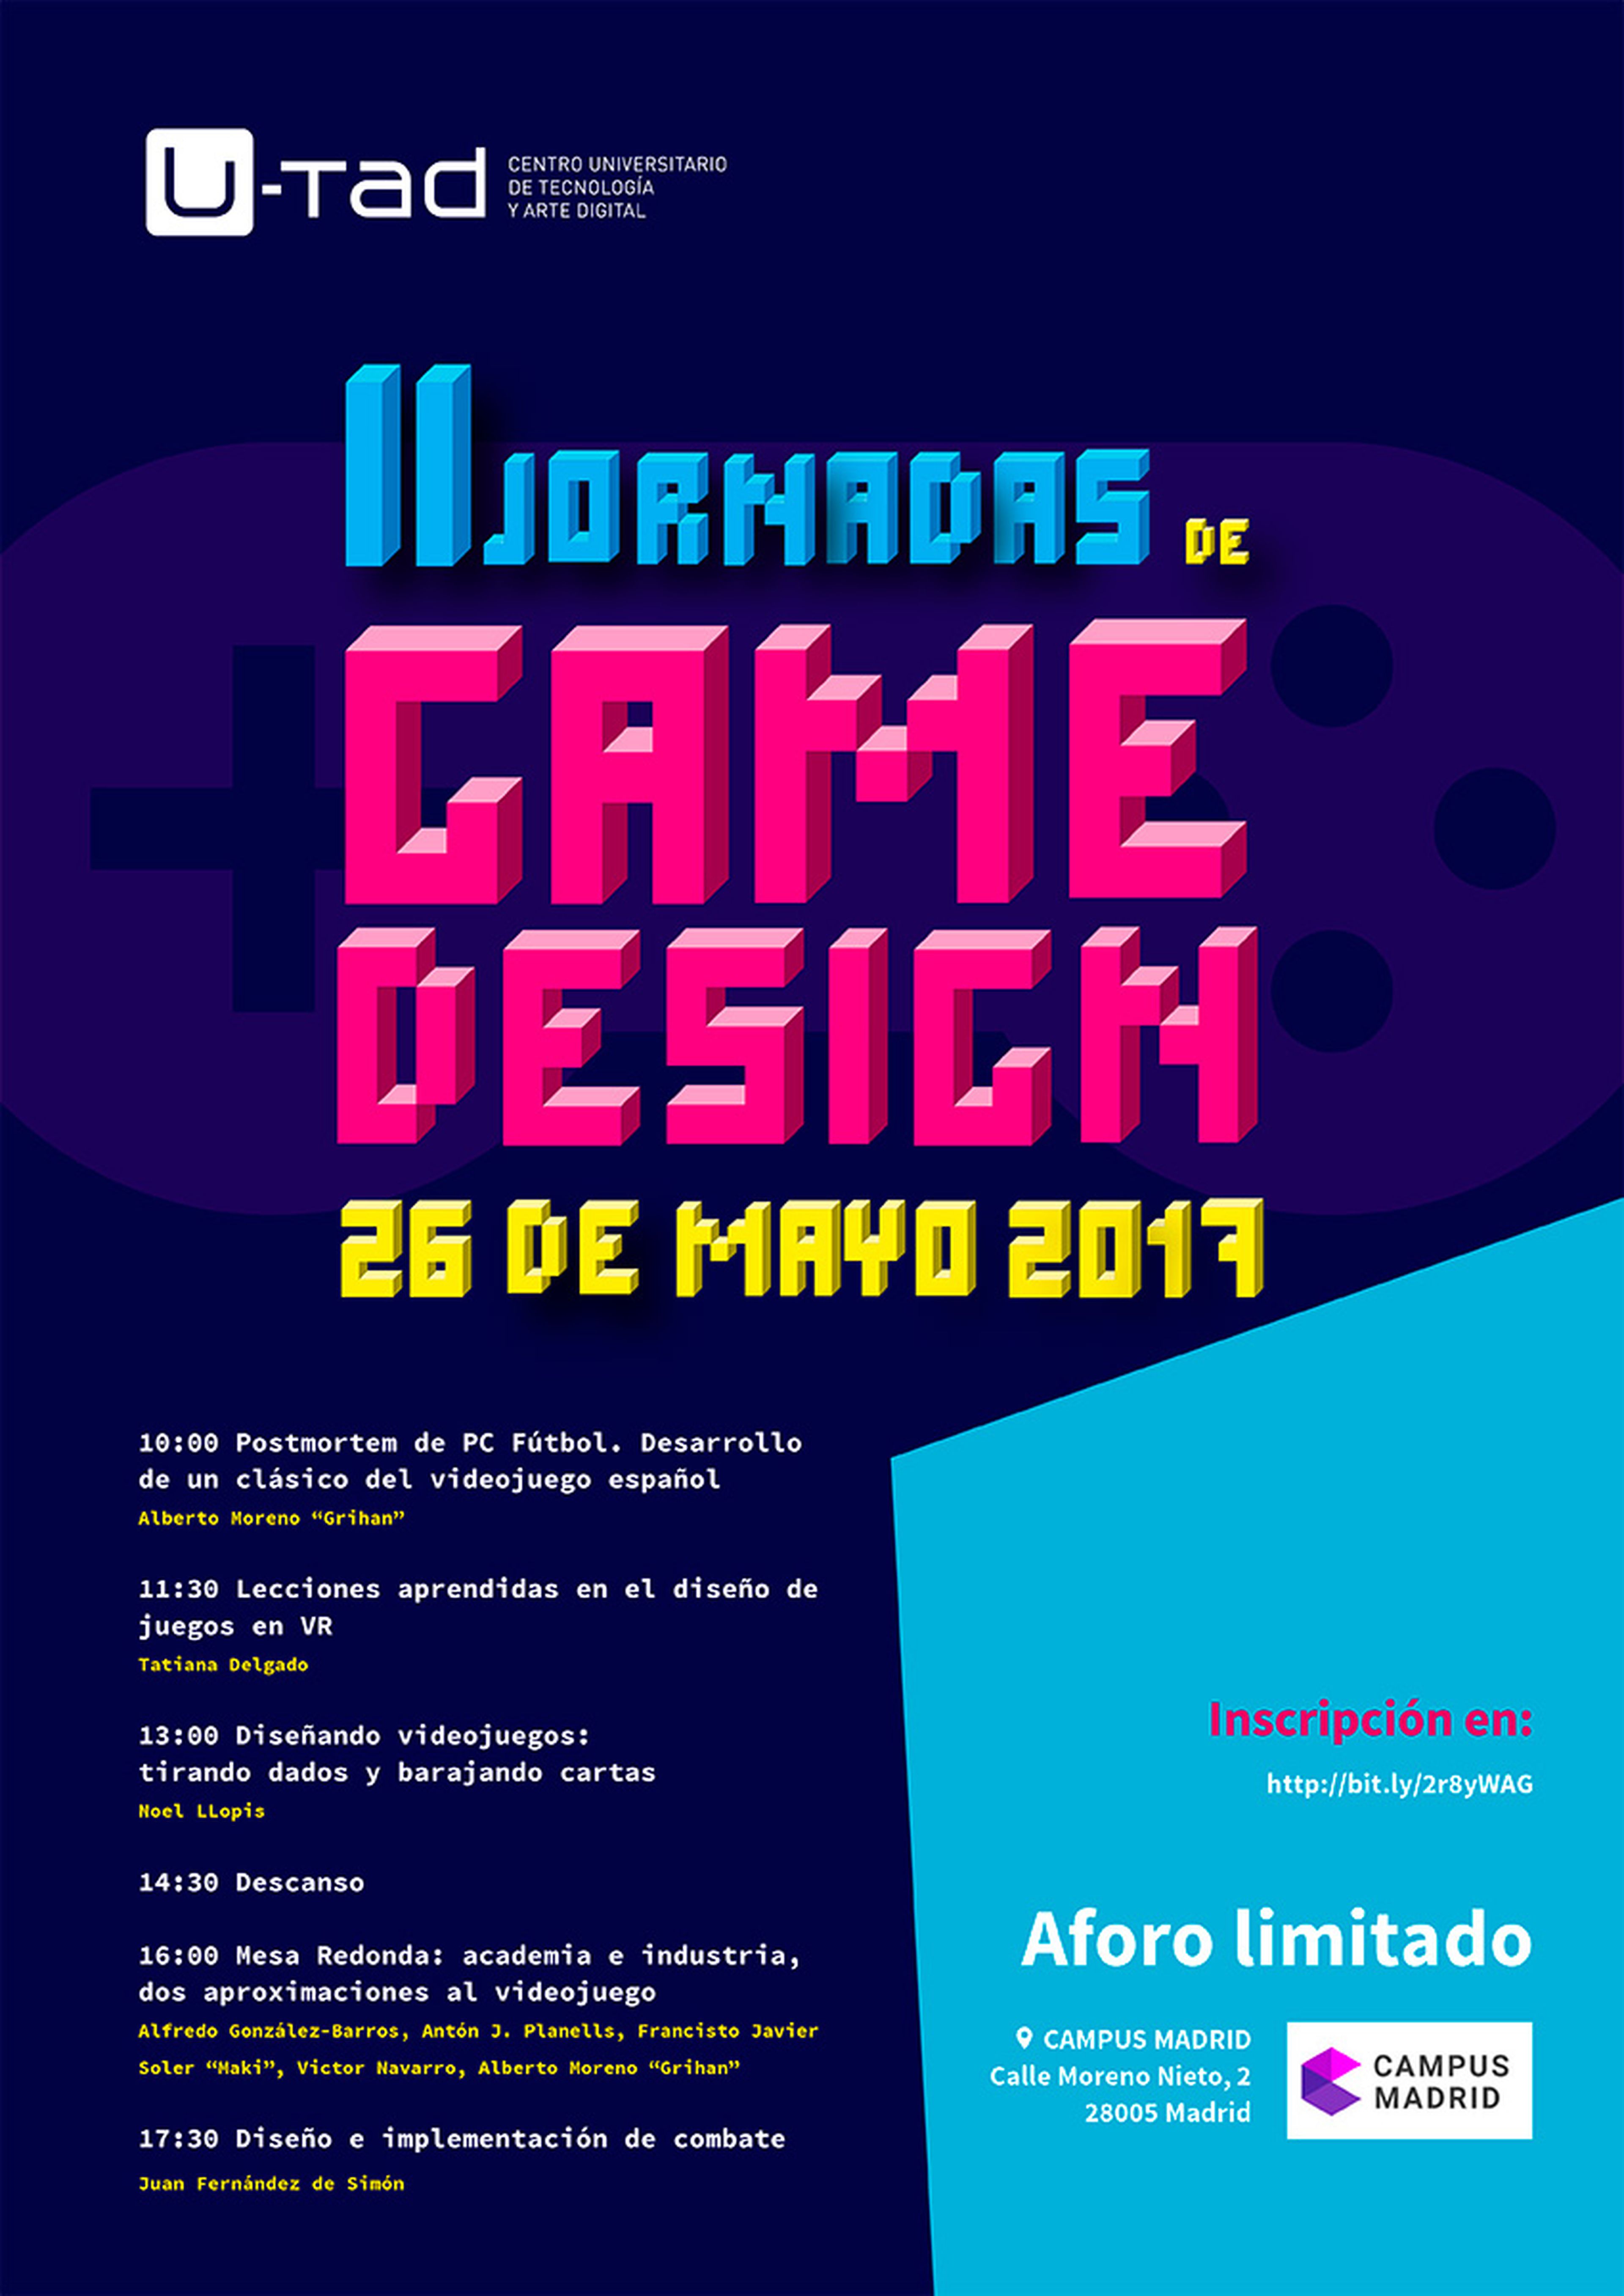 II Jornadas Game Design de U-tad